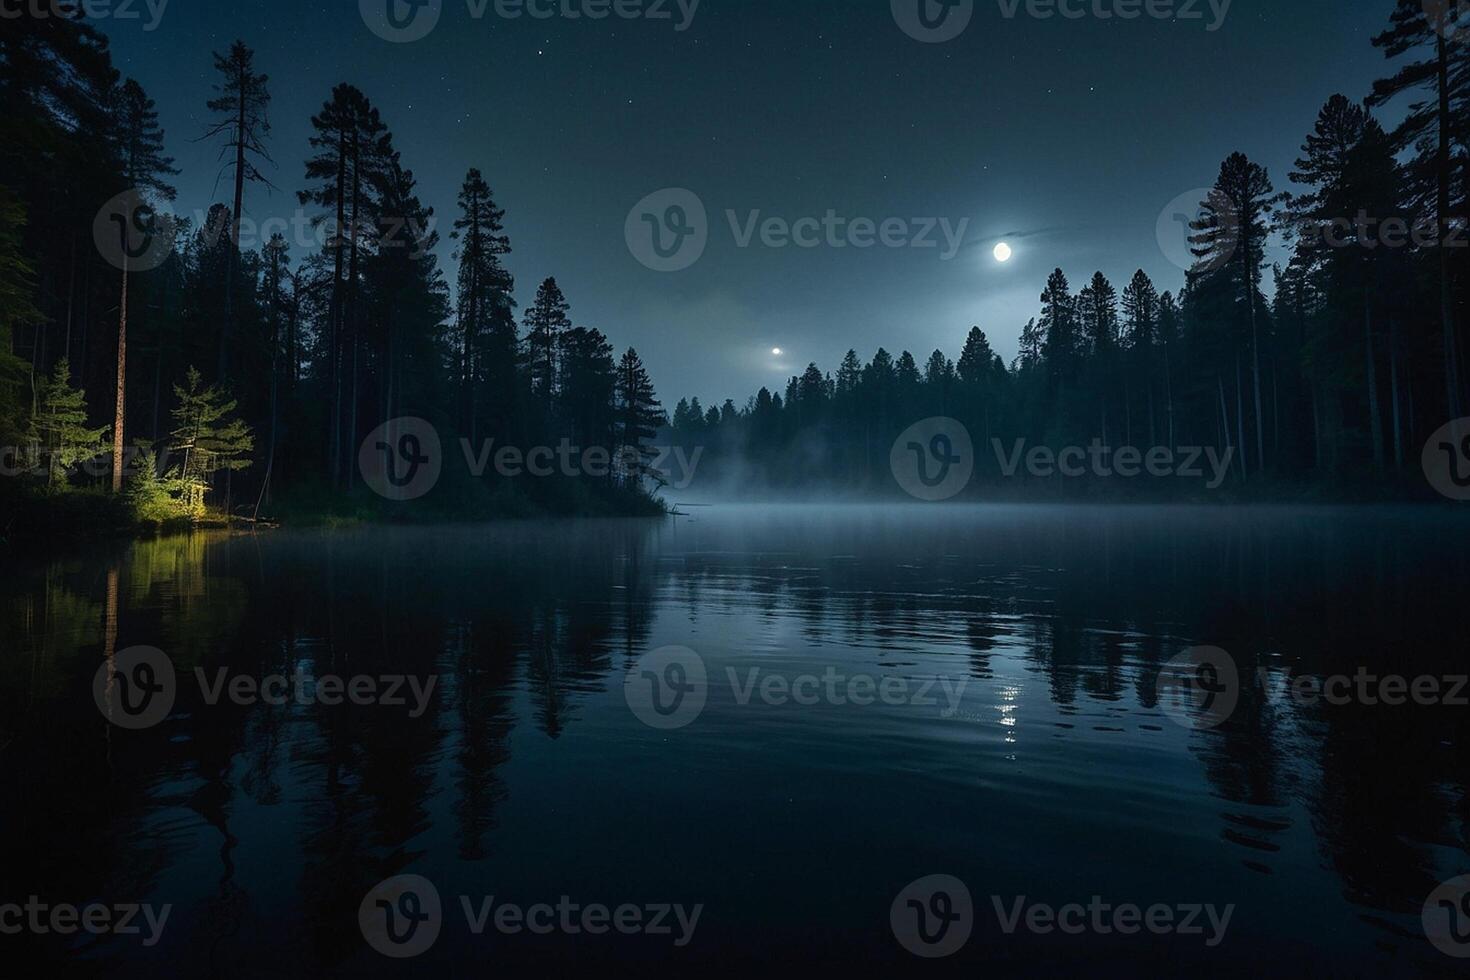 a moon rises over a lake at night photo